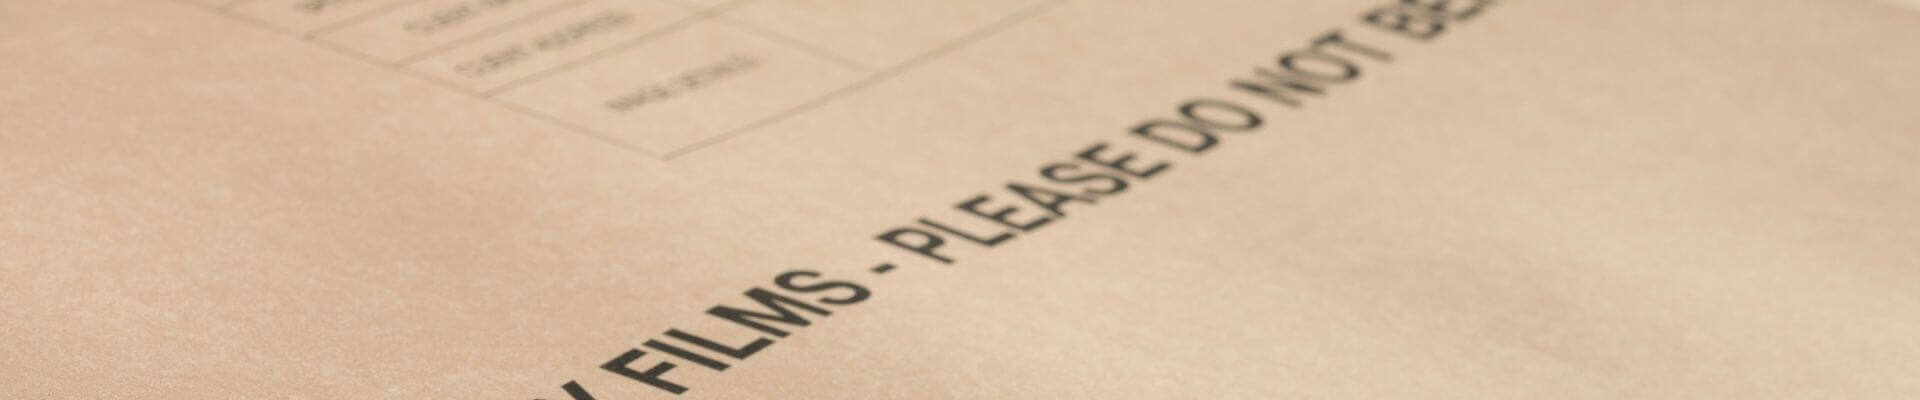 Personalisation - Process - Litho Print